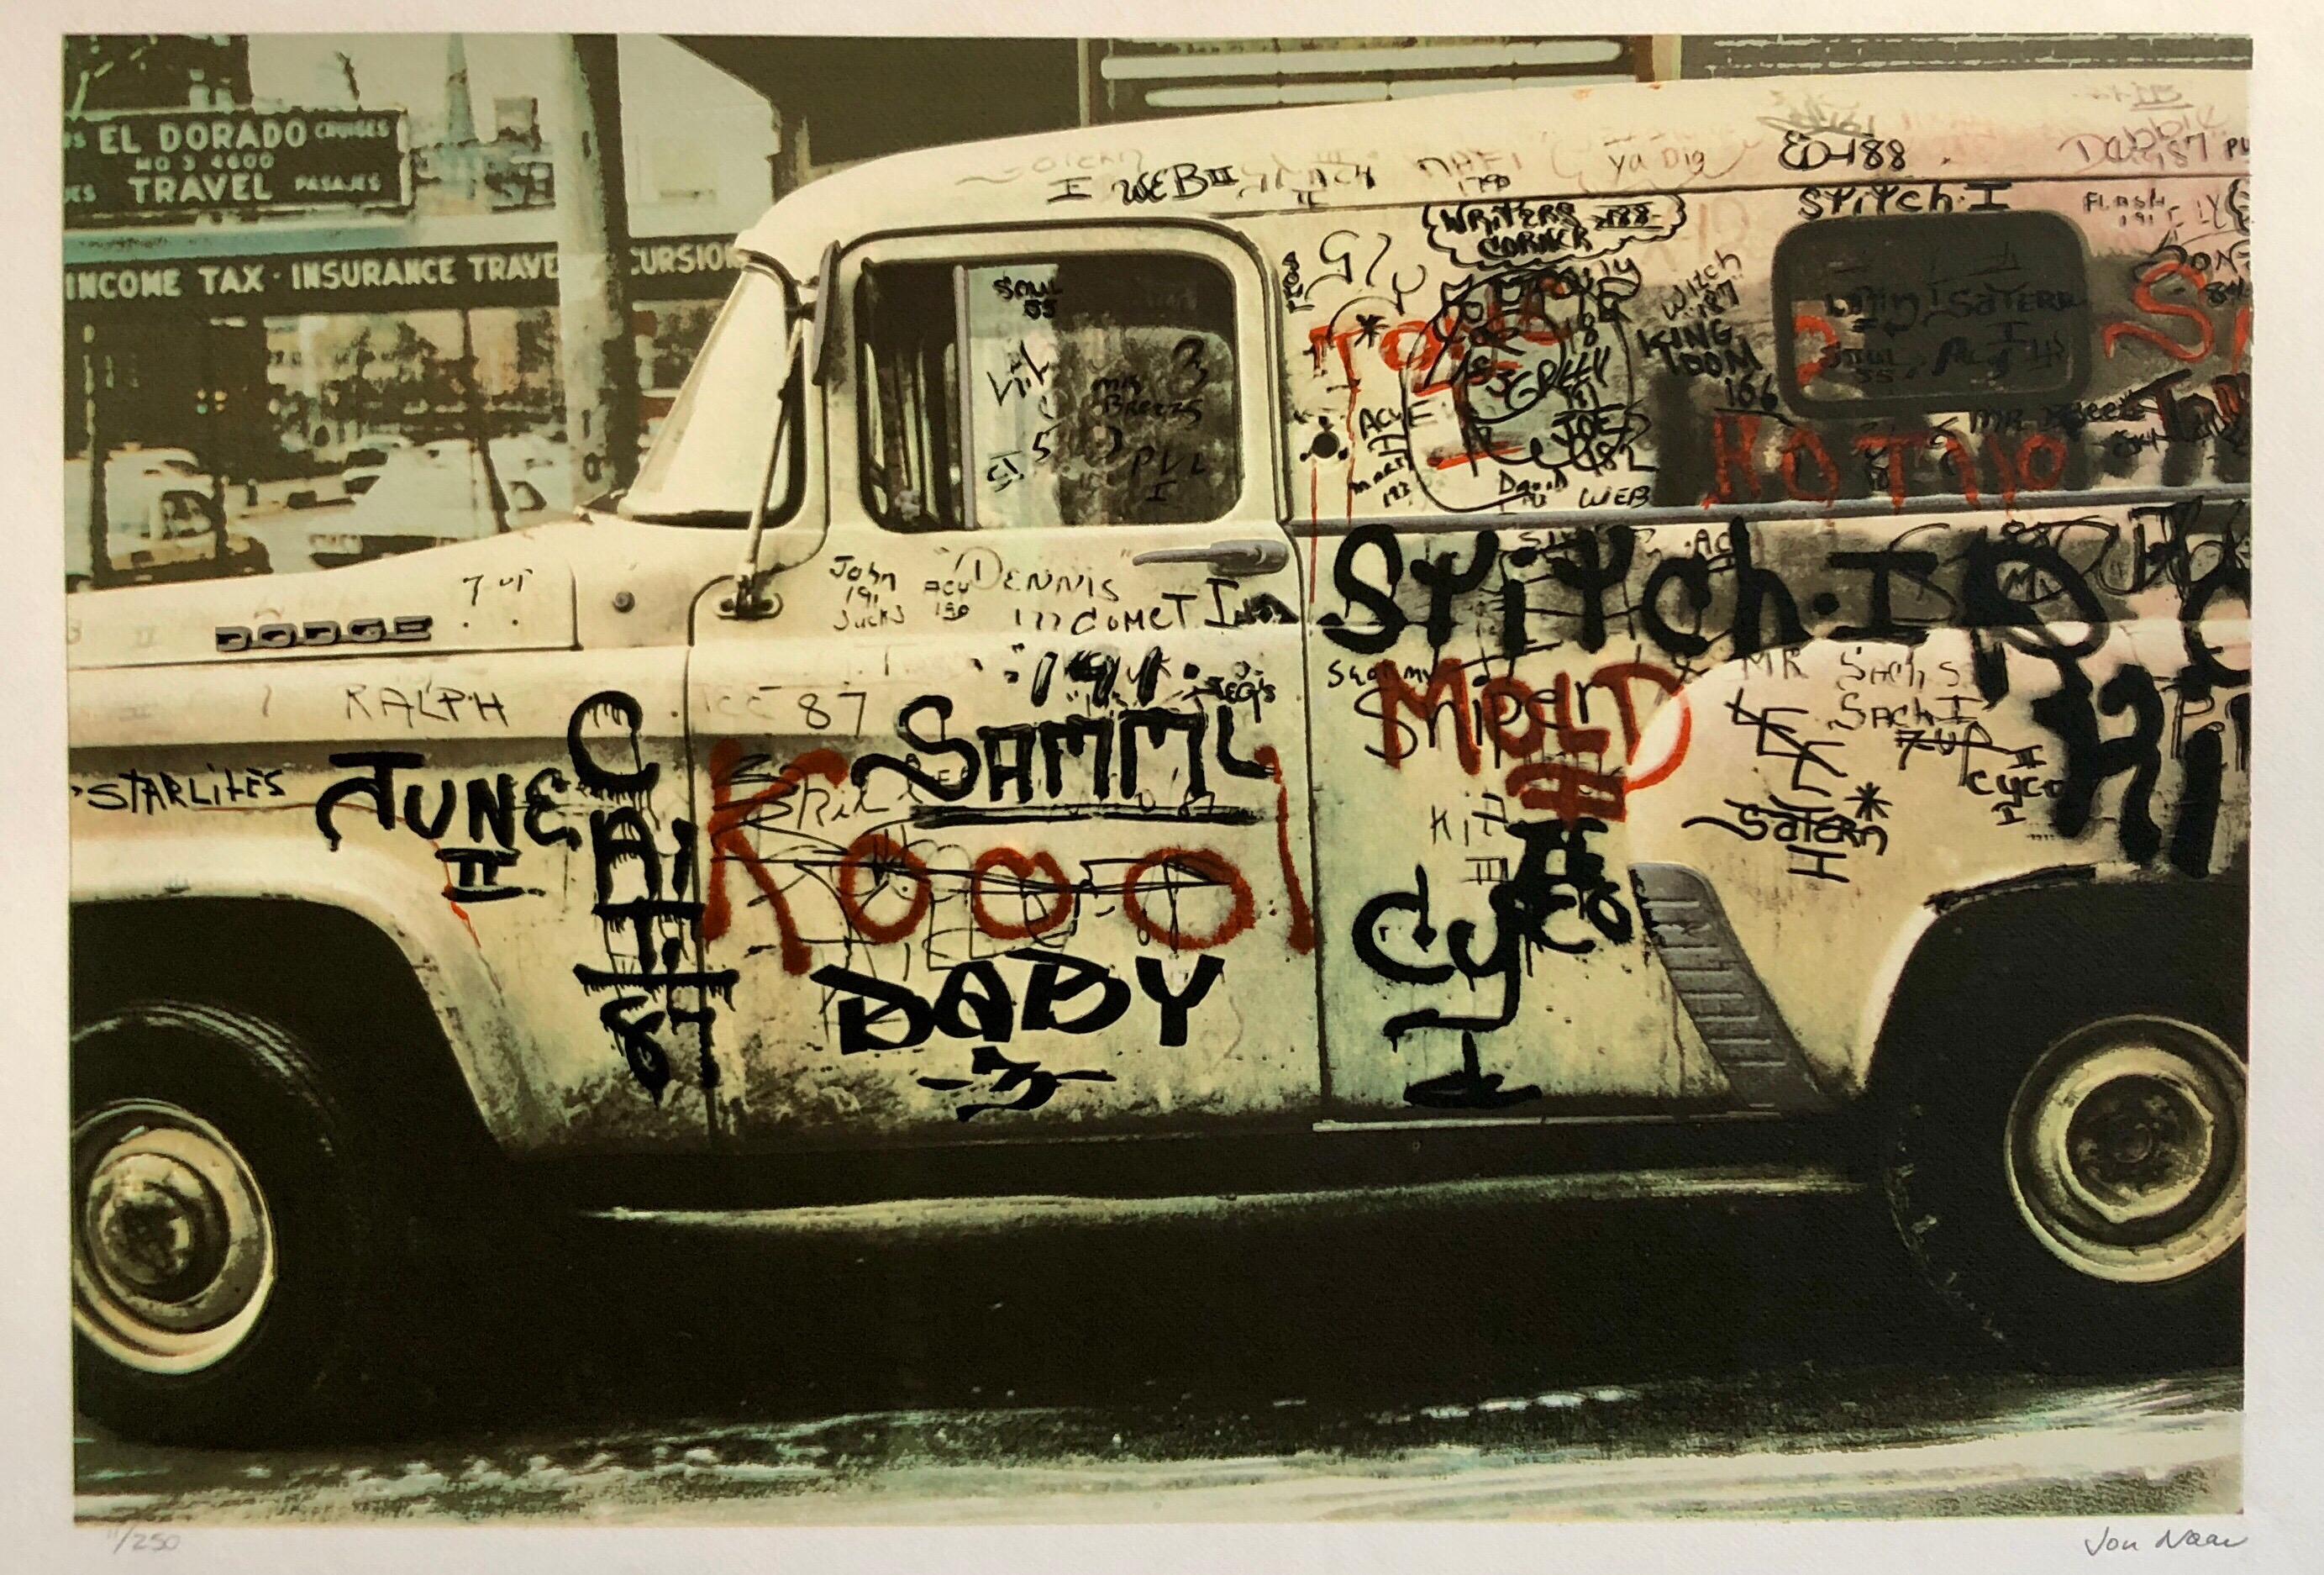 Abstract Print Jon Naar - Photographie d'art graffiti sérigraphiée camion New York City 1970 Pop Art